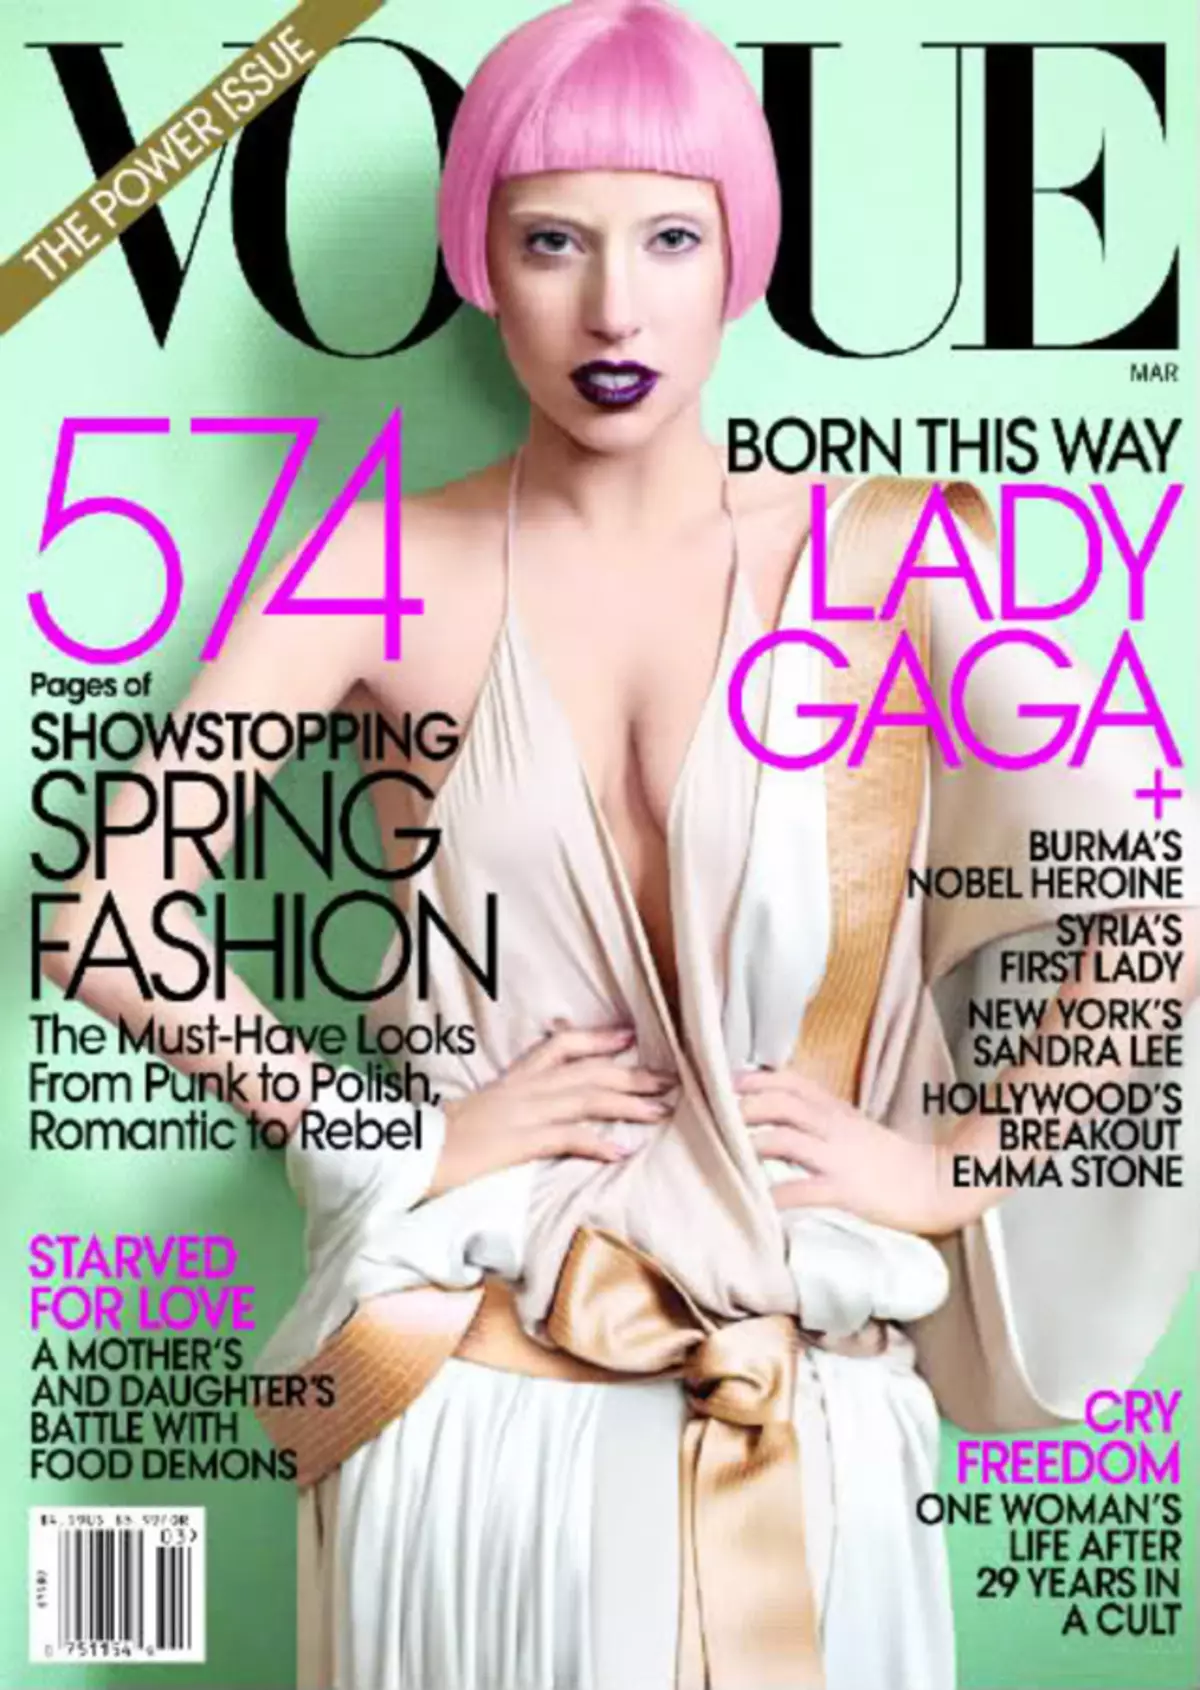 Interviu Lady Gaga în revista Vogue